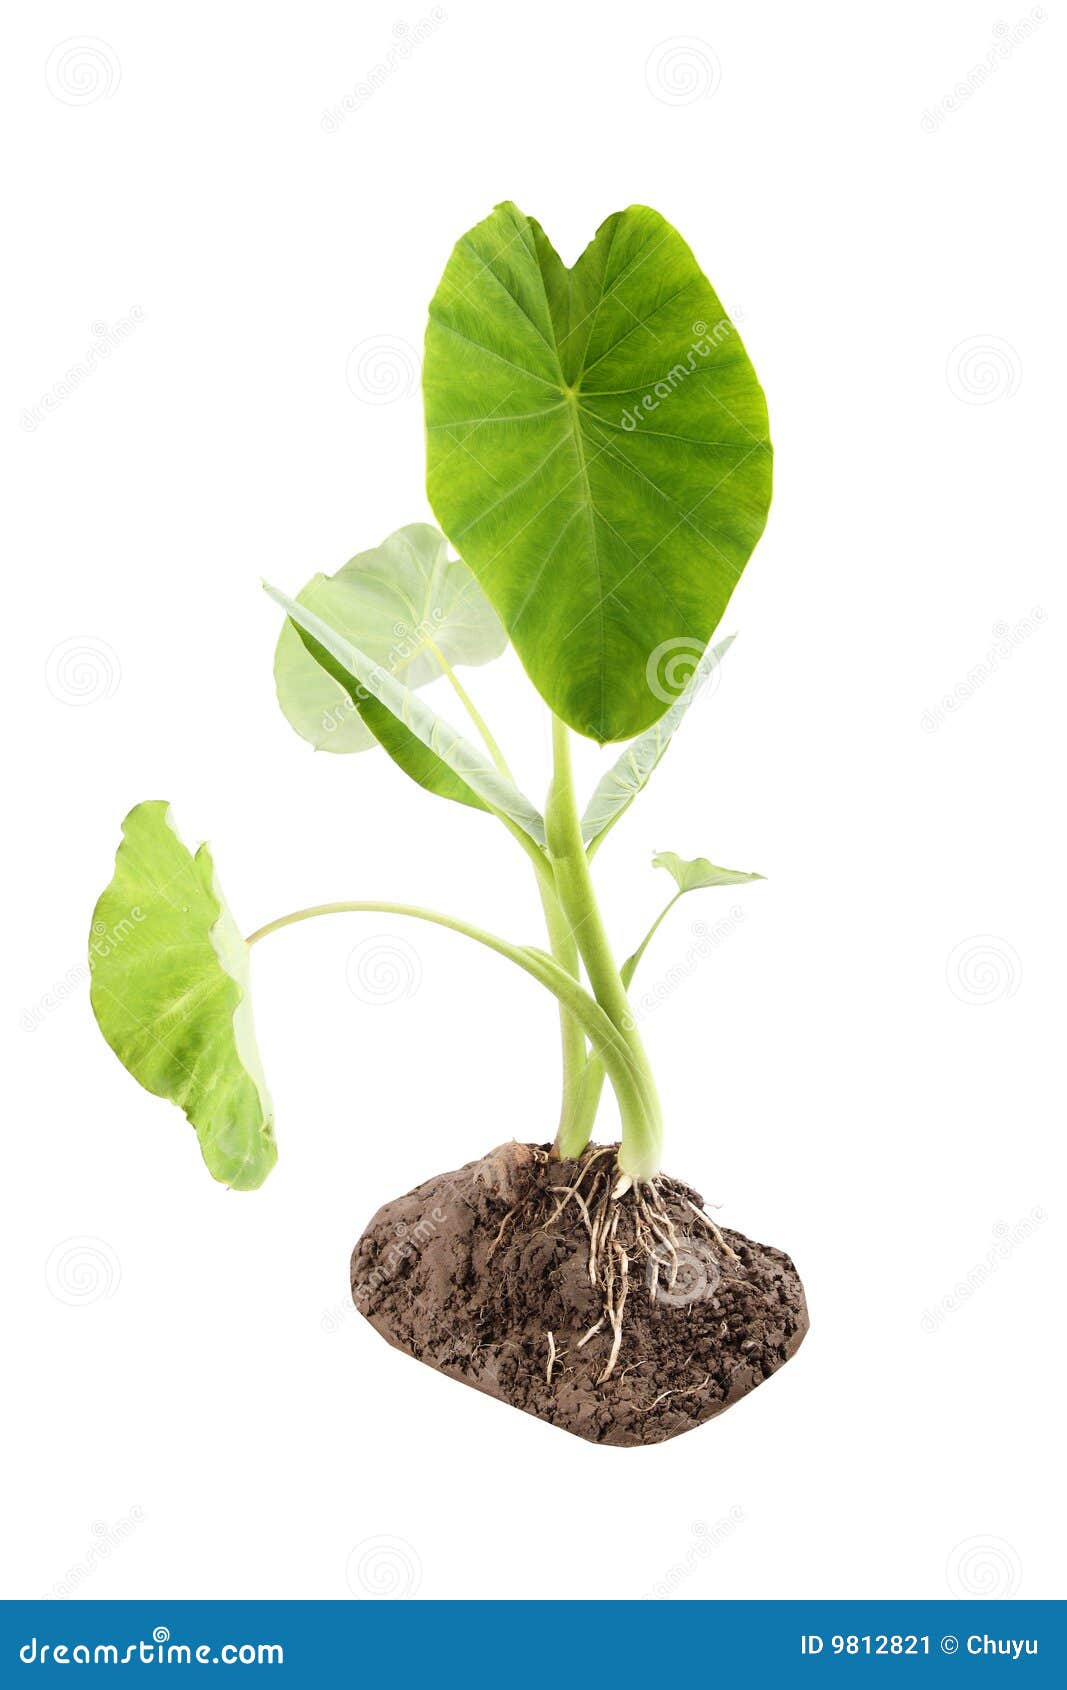 Taro stock image. Image of corm, foliage, fresh, nature - 9812821